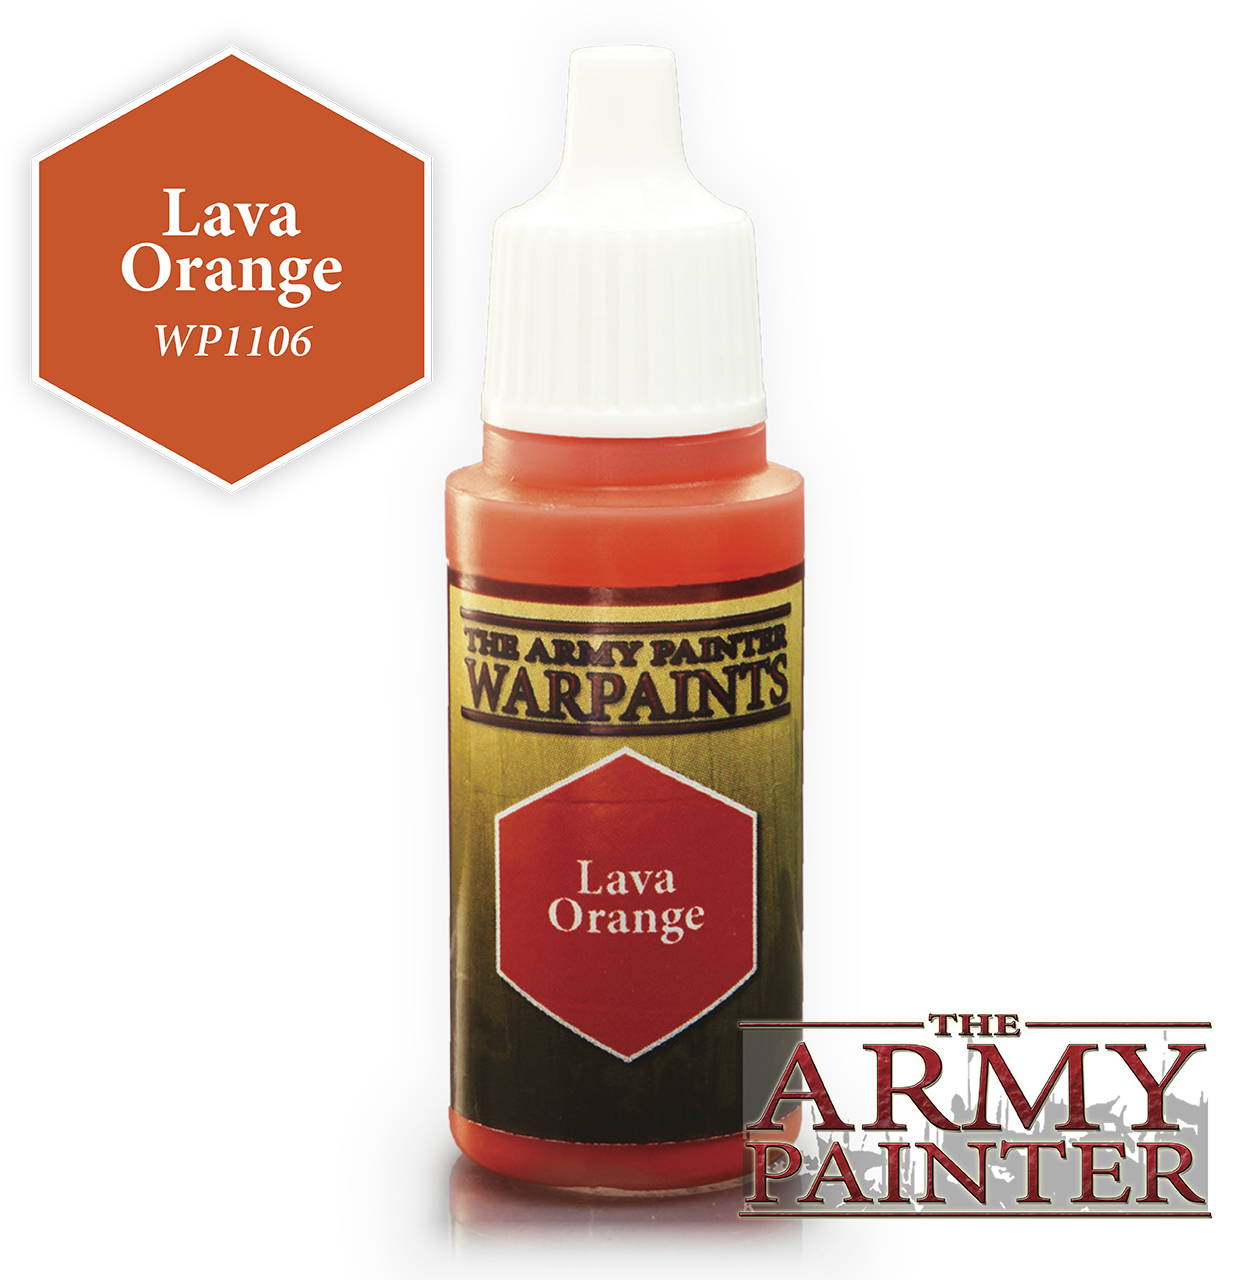 The ARMY PAINTER: Acrylics Warpaint - Lava Orange | Tacoma Games